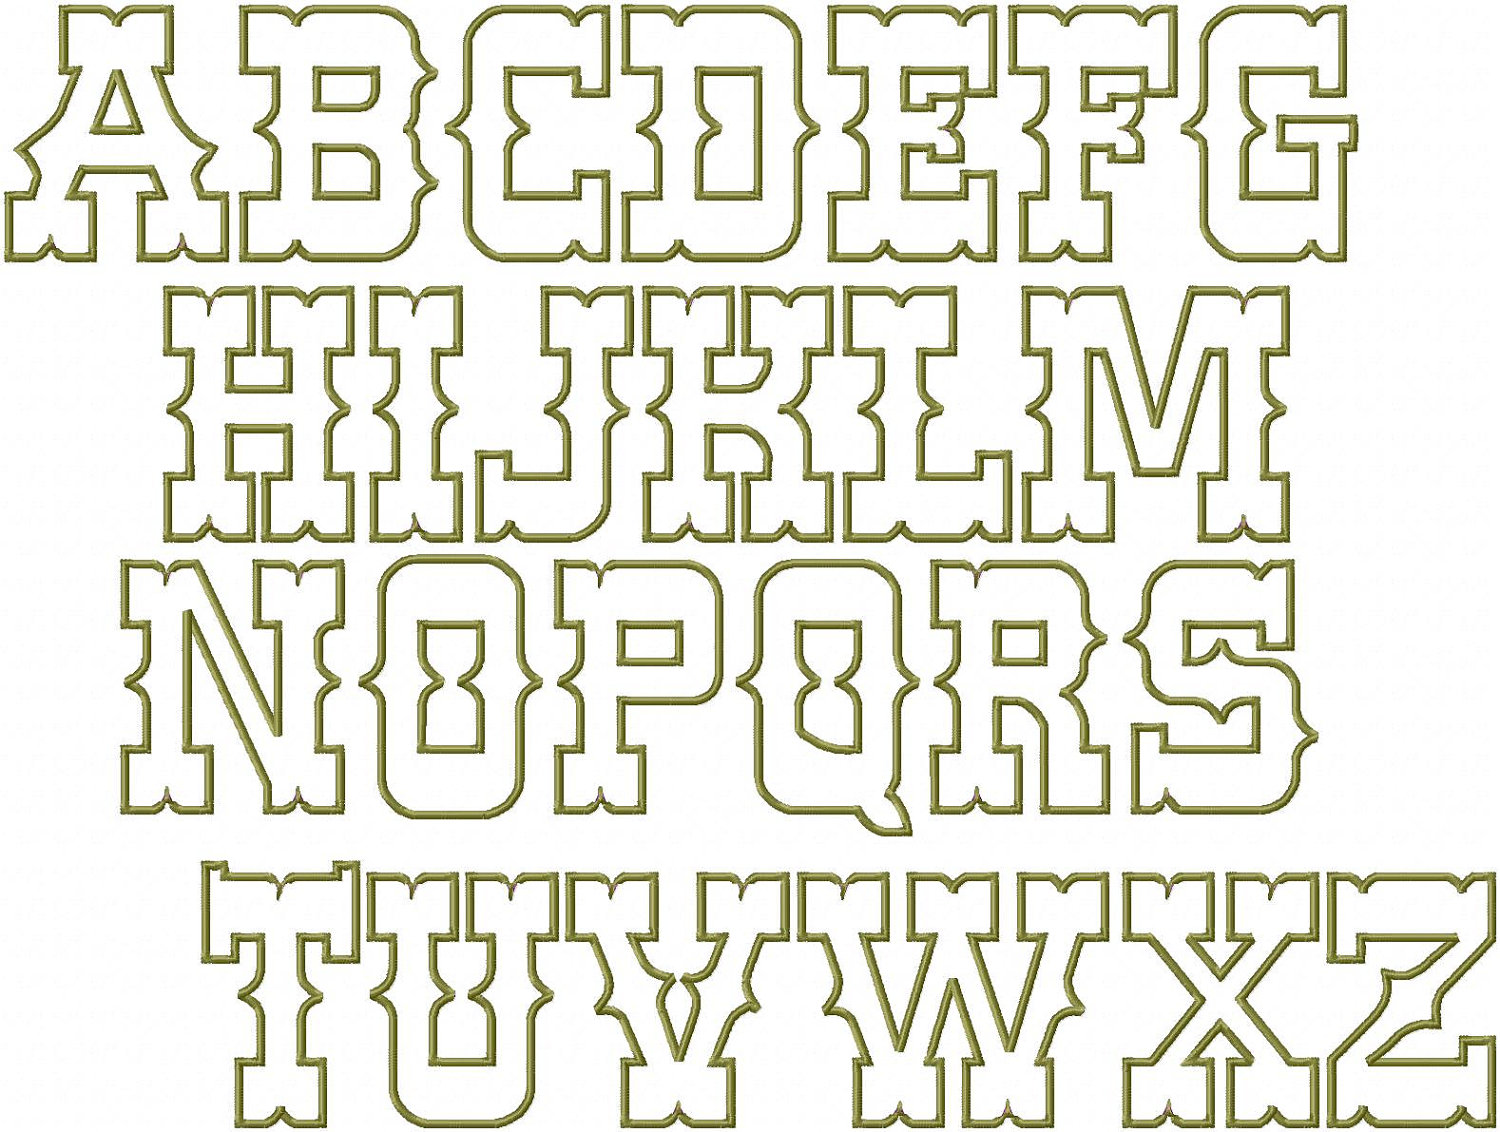 Western Font Alphabet Letters